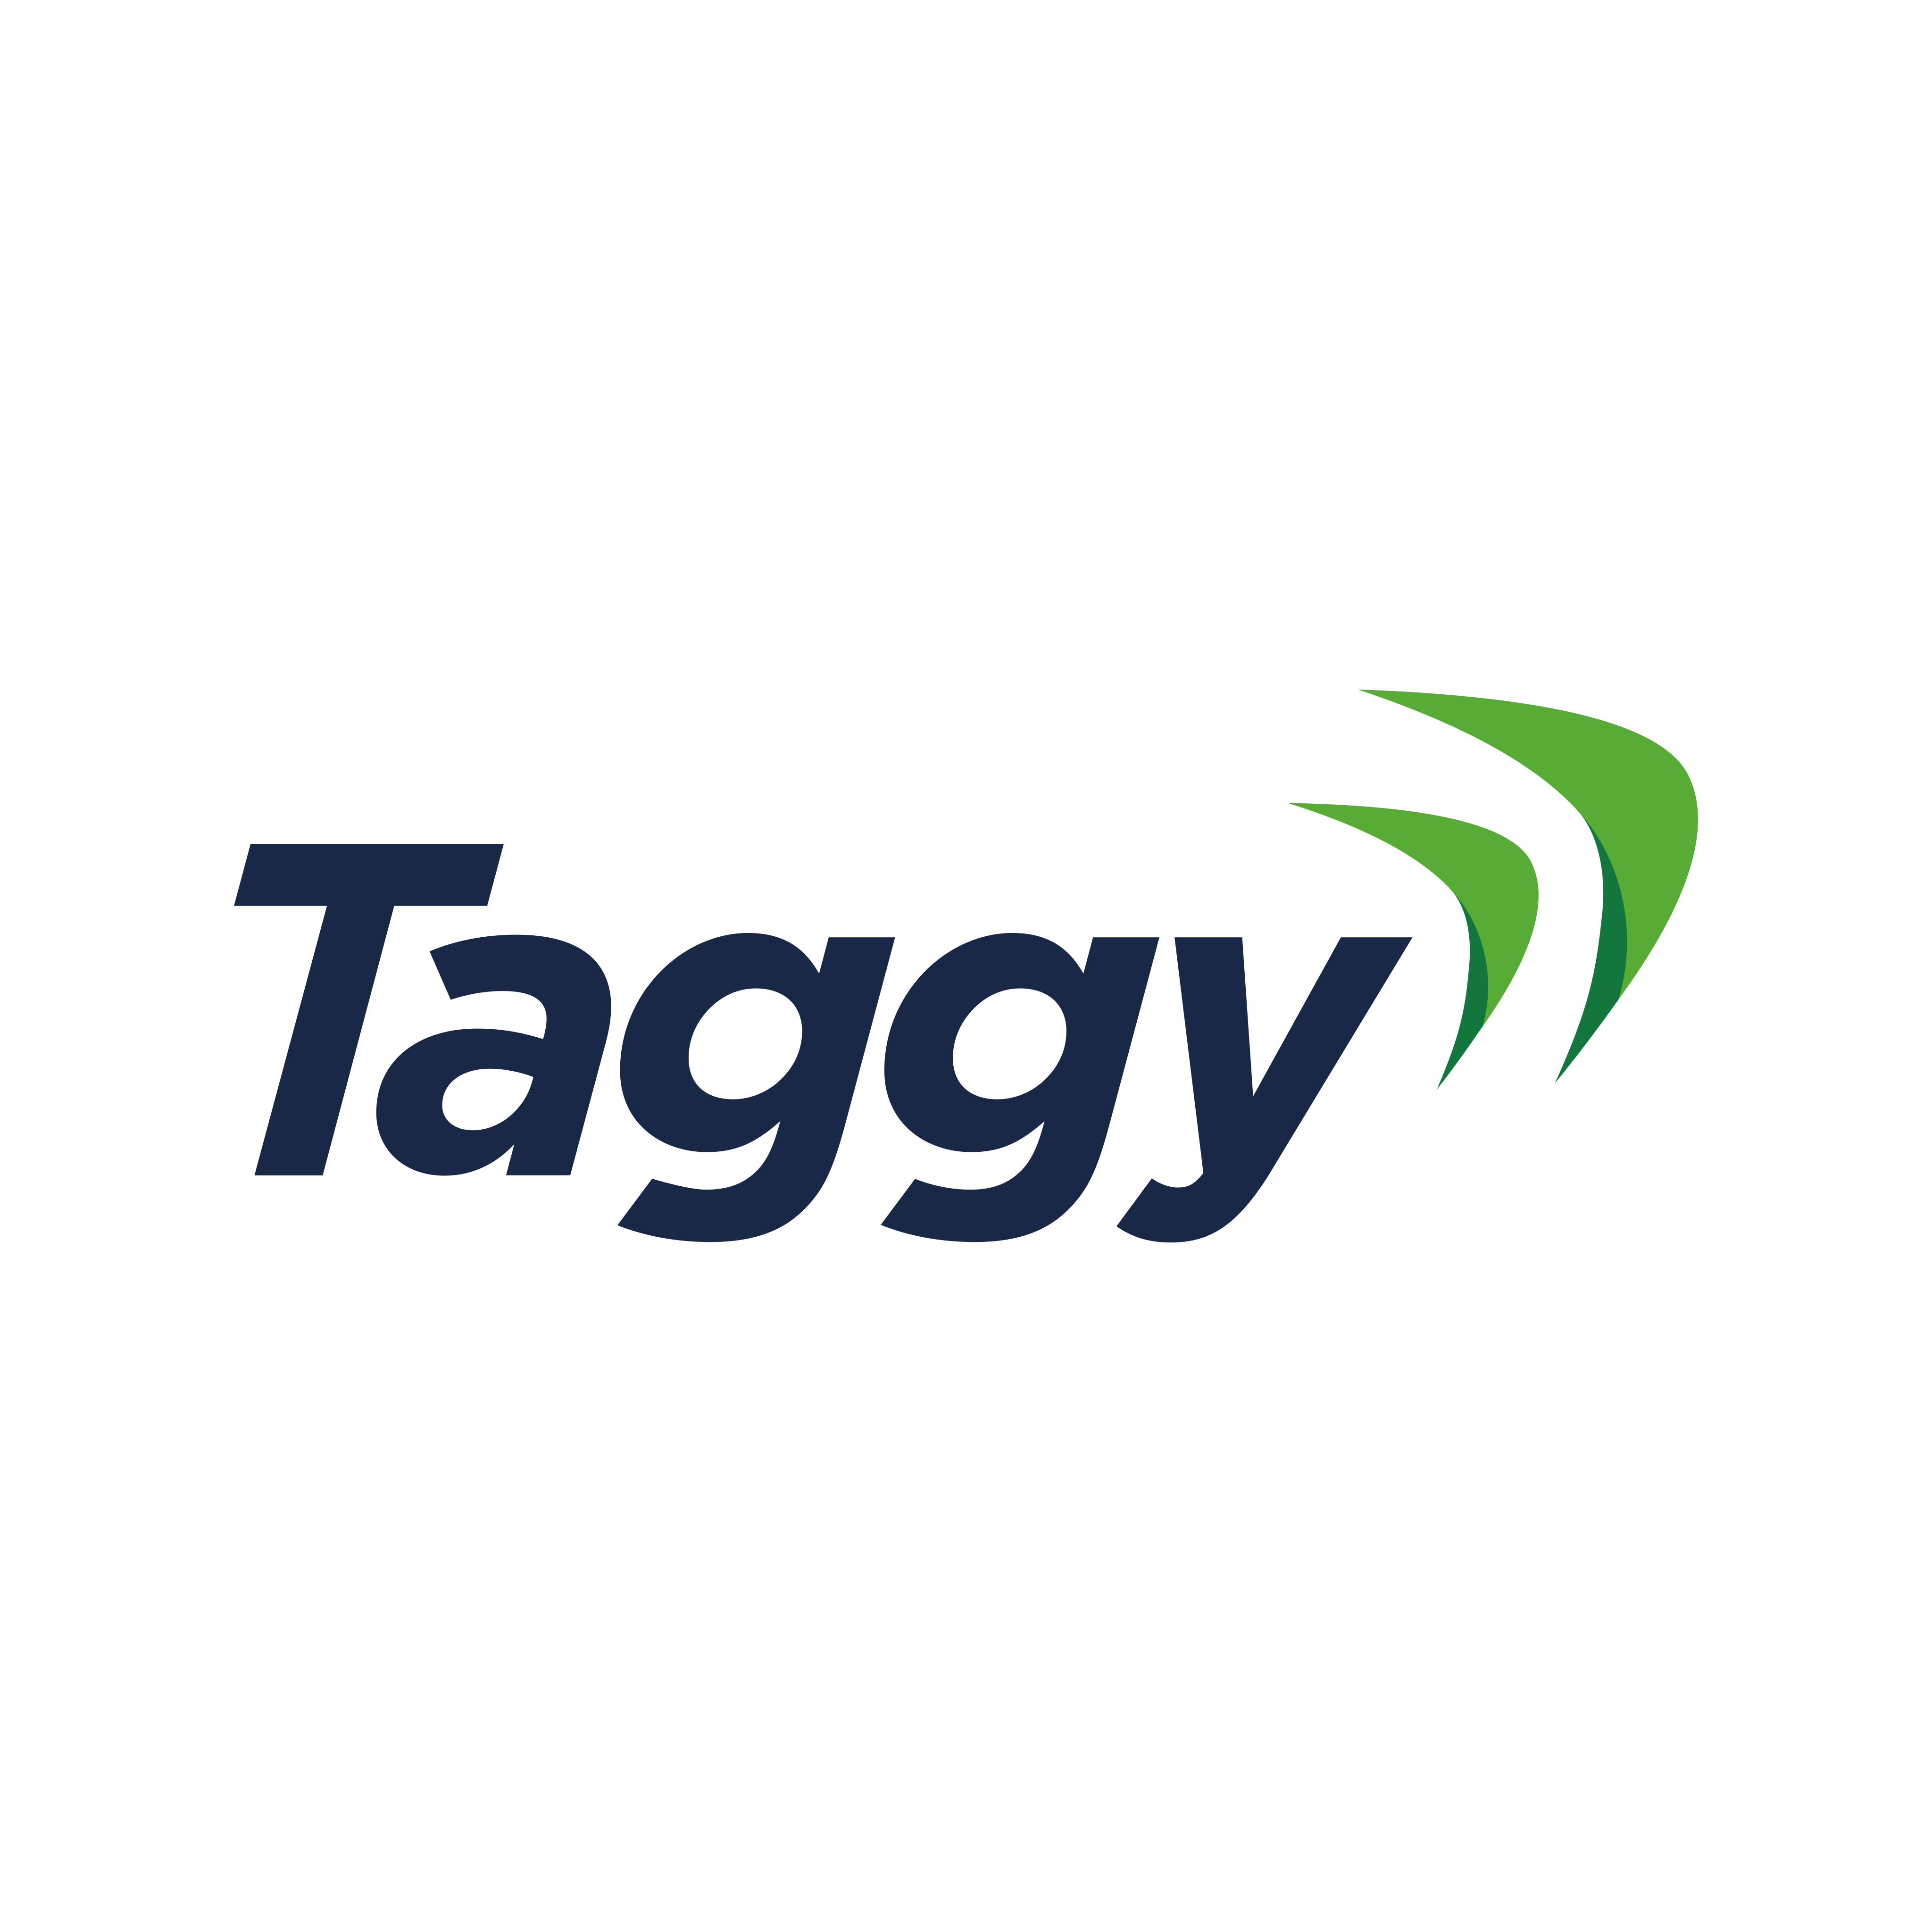 taggy logo 0 - Taggy Logo